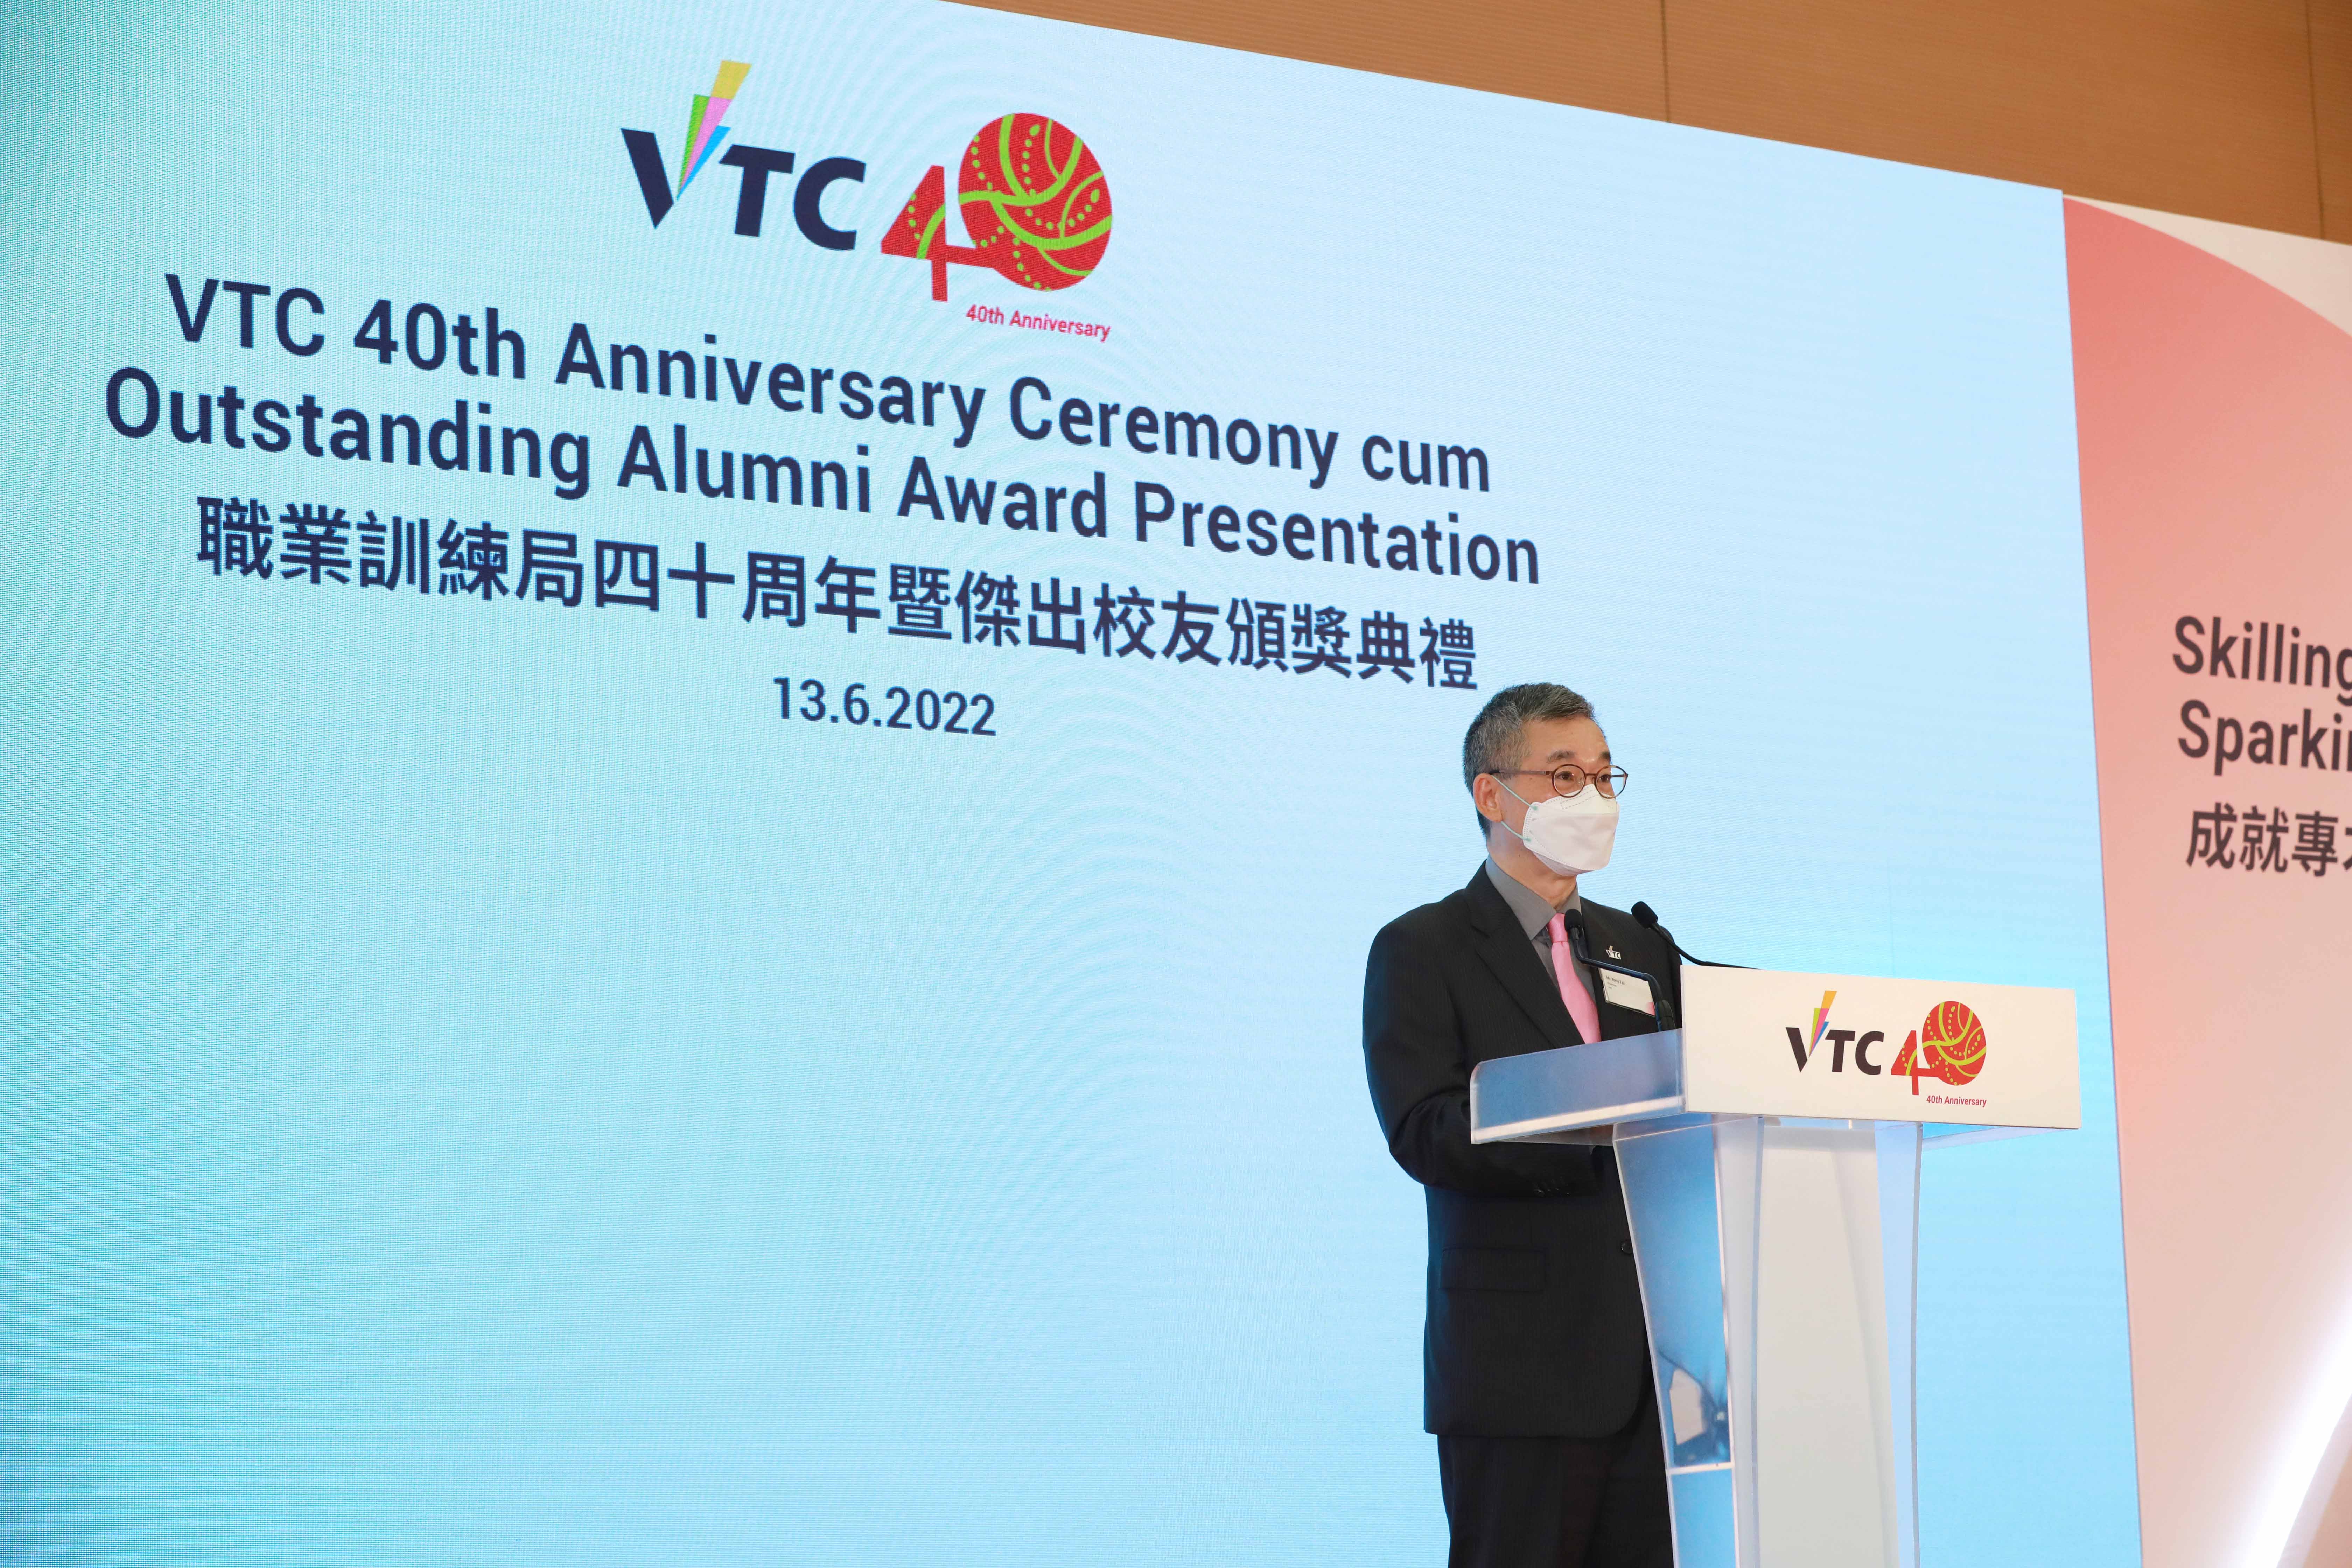 VTC 40th Anniversary Ceremony
cum Outstanding Alumni Award Presentation
Skilling Talent • Sparking Innovation